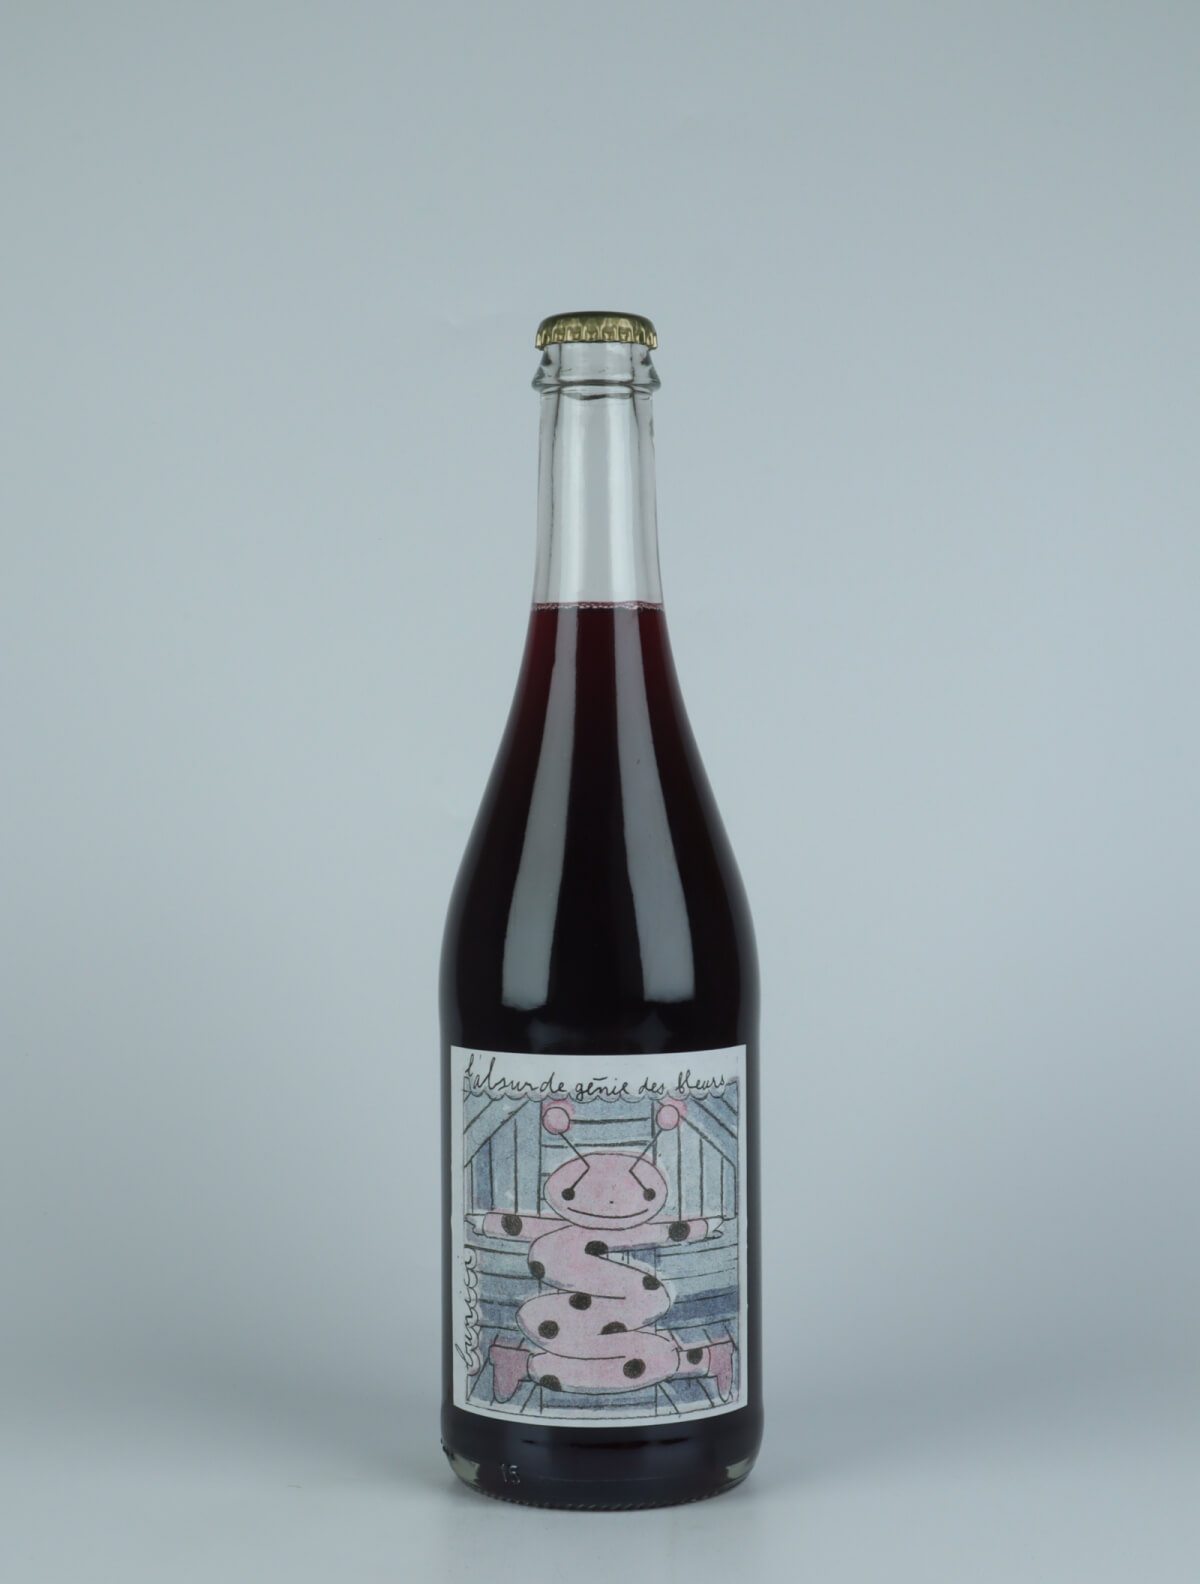 A bottle 2021 Bunici Red wine from Absurde Génie des Fleurs, Languedoc in France